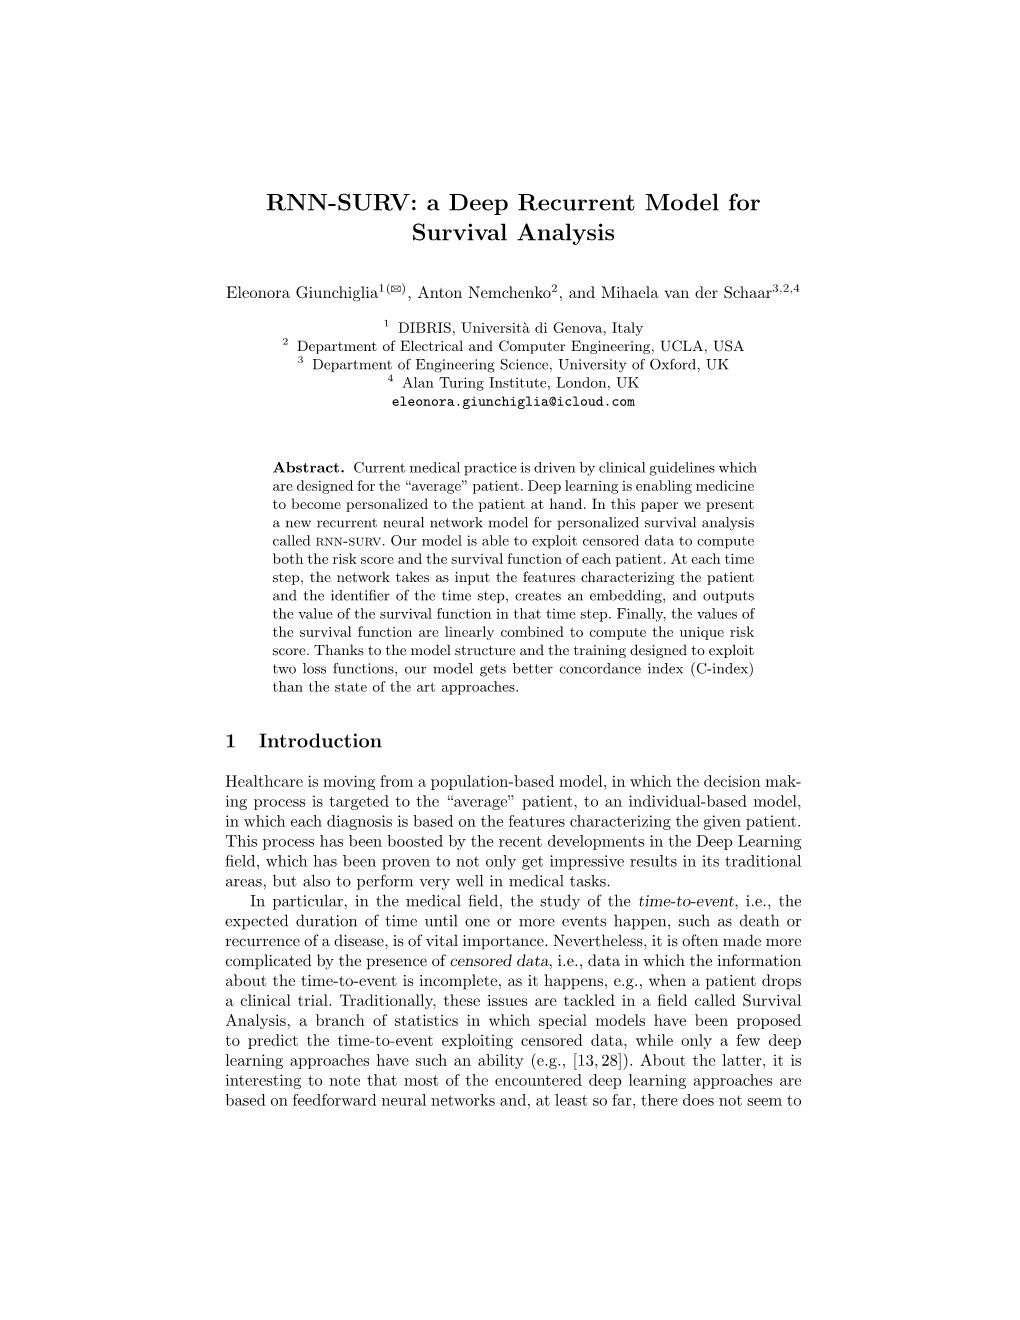 RNN-SURV: a Deep Recurrent Model for Survival Analysis